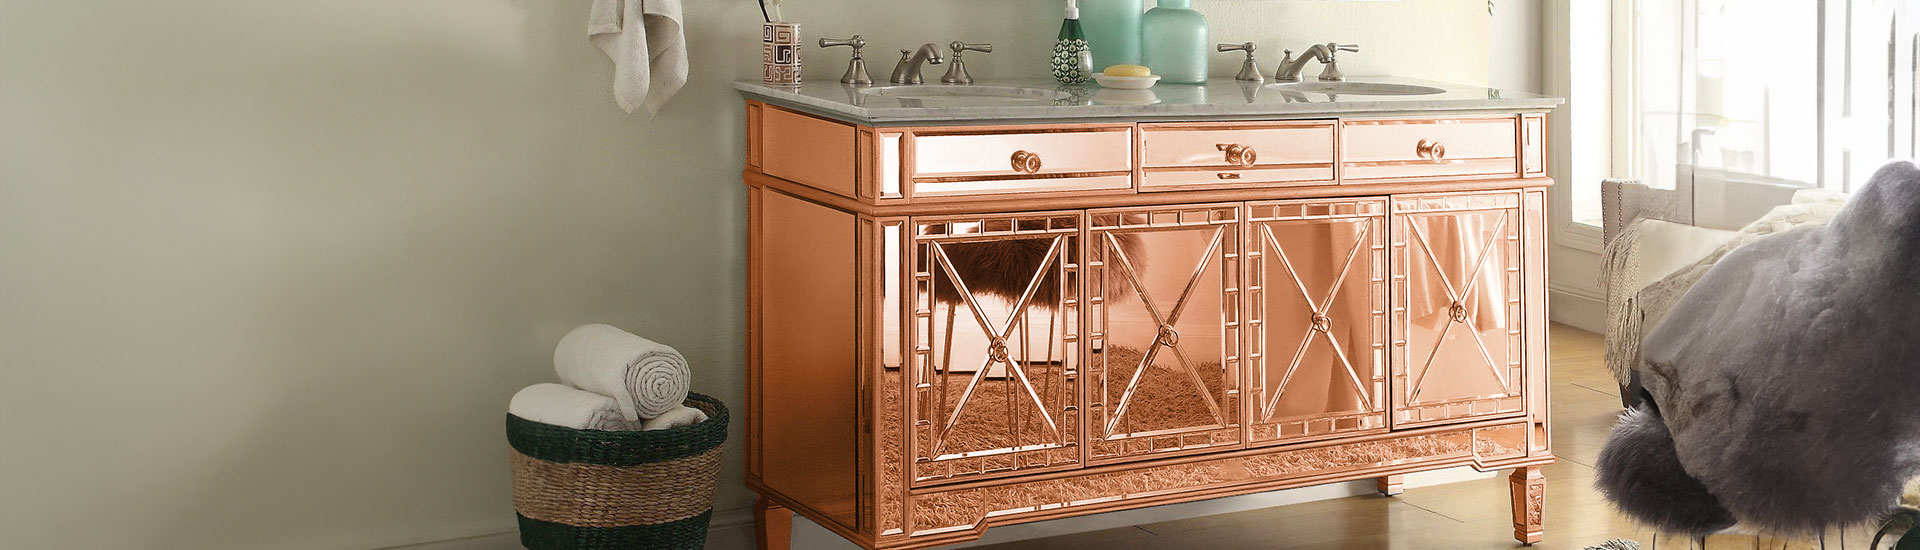 Copper Bathroom Cabinet Wraps